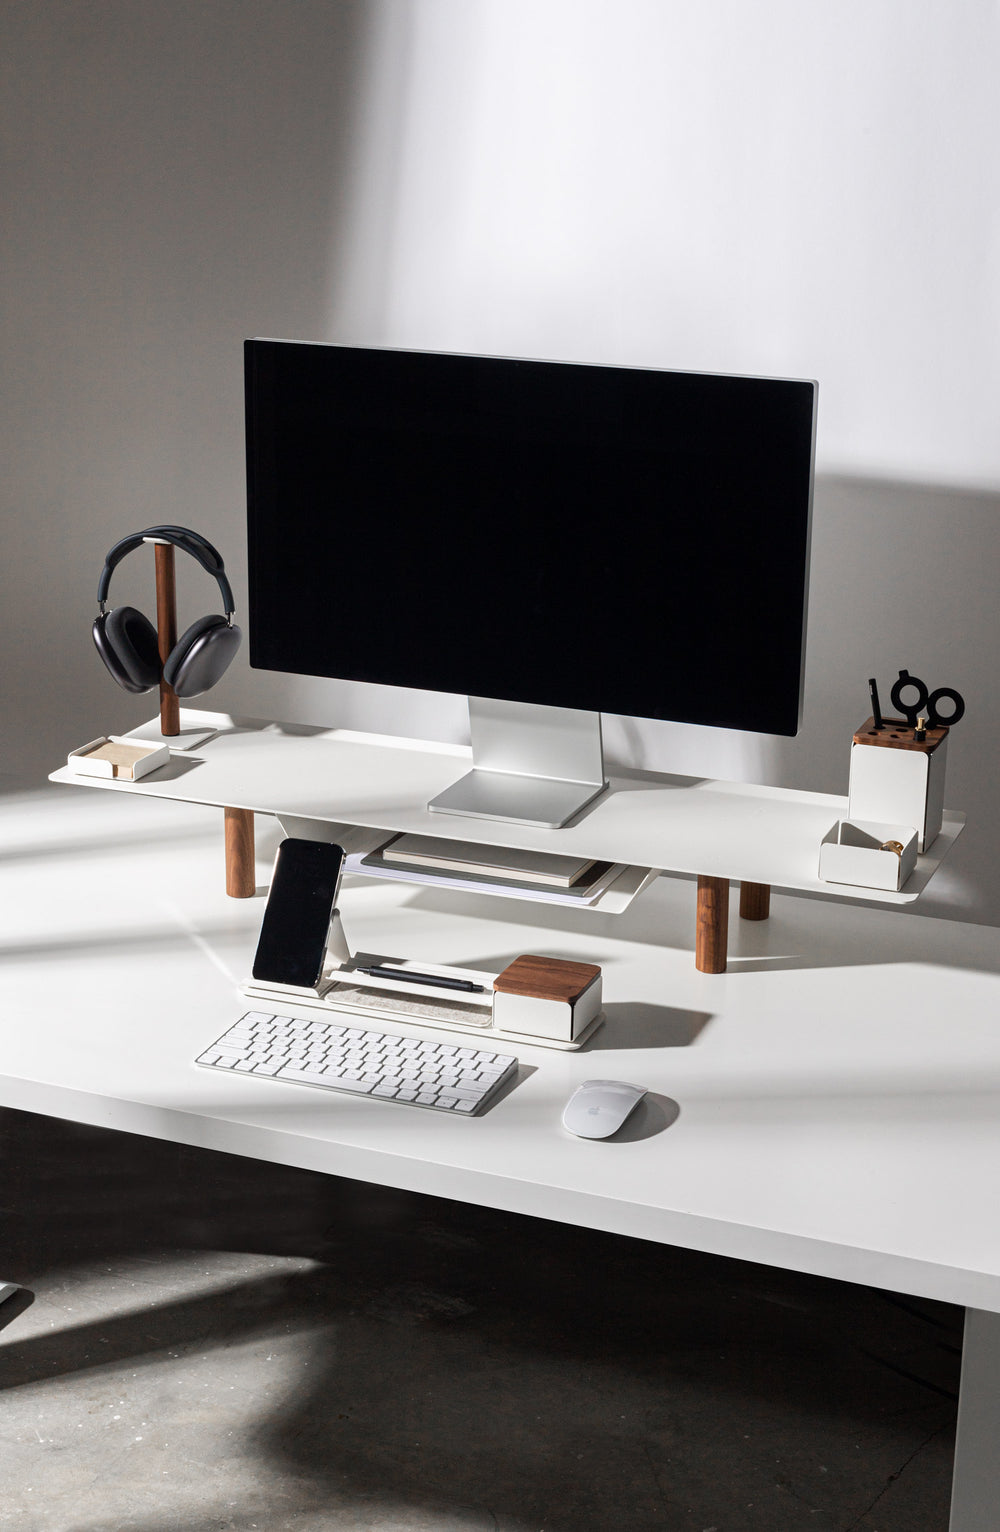 Leather Desk Set - Leather Organizer Desk Set - Walnut Wood Desk Set -  Office Product - Desk Accessories Set - 11 PCS (Black)